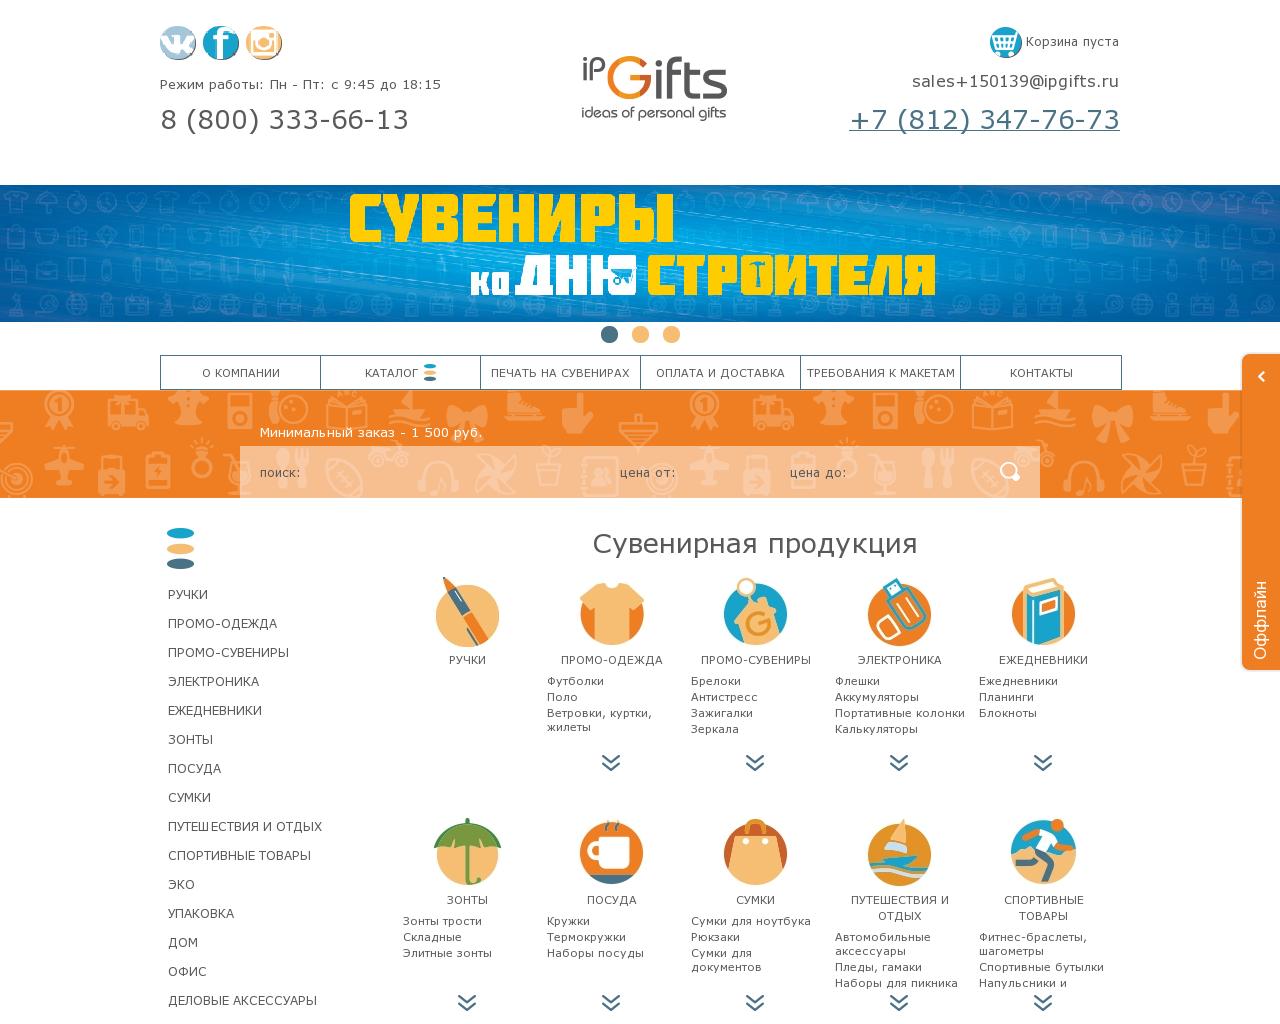 Изображение сайта ipgifts.ru в разрешении 1280x1024